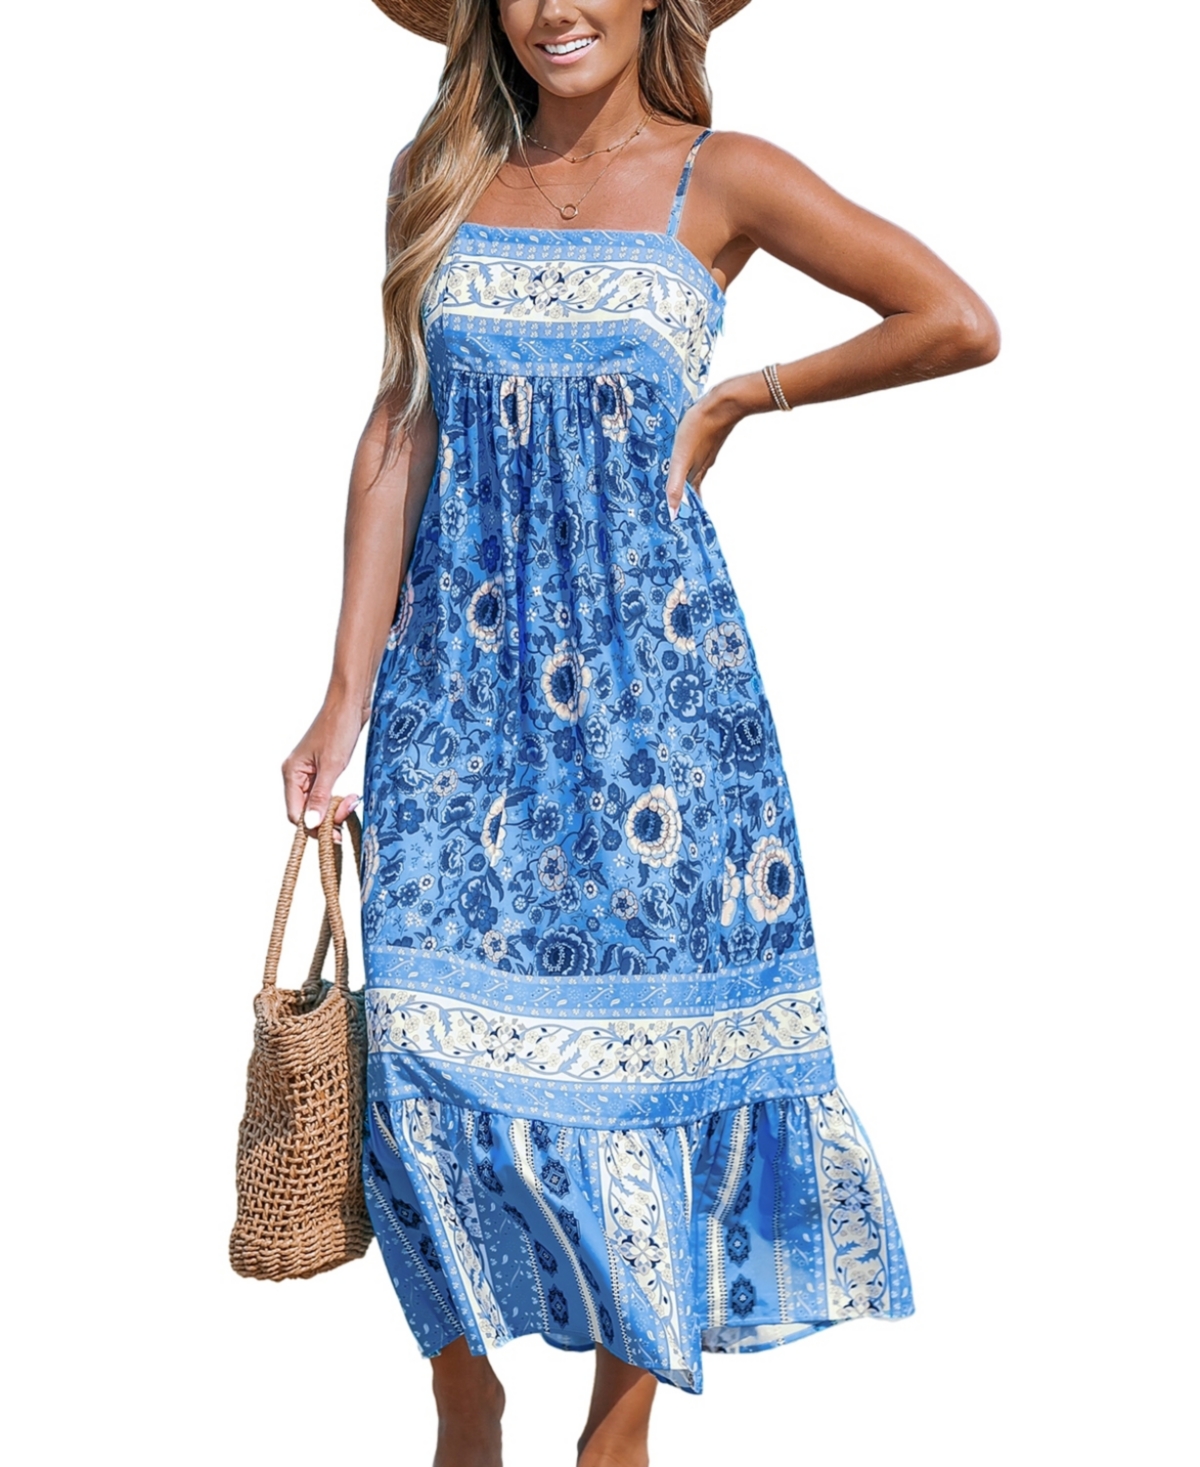 Women's Boho Floral Ruffle Slip Beach Dress - Light/pastel blue